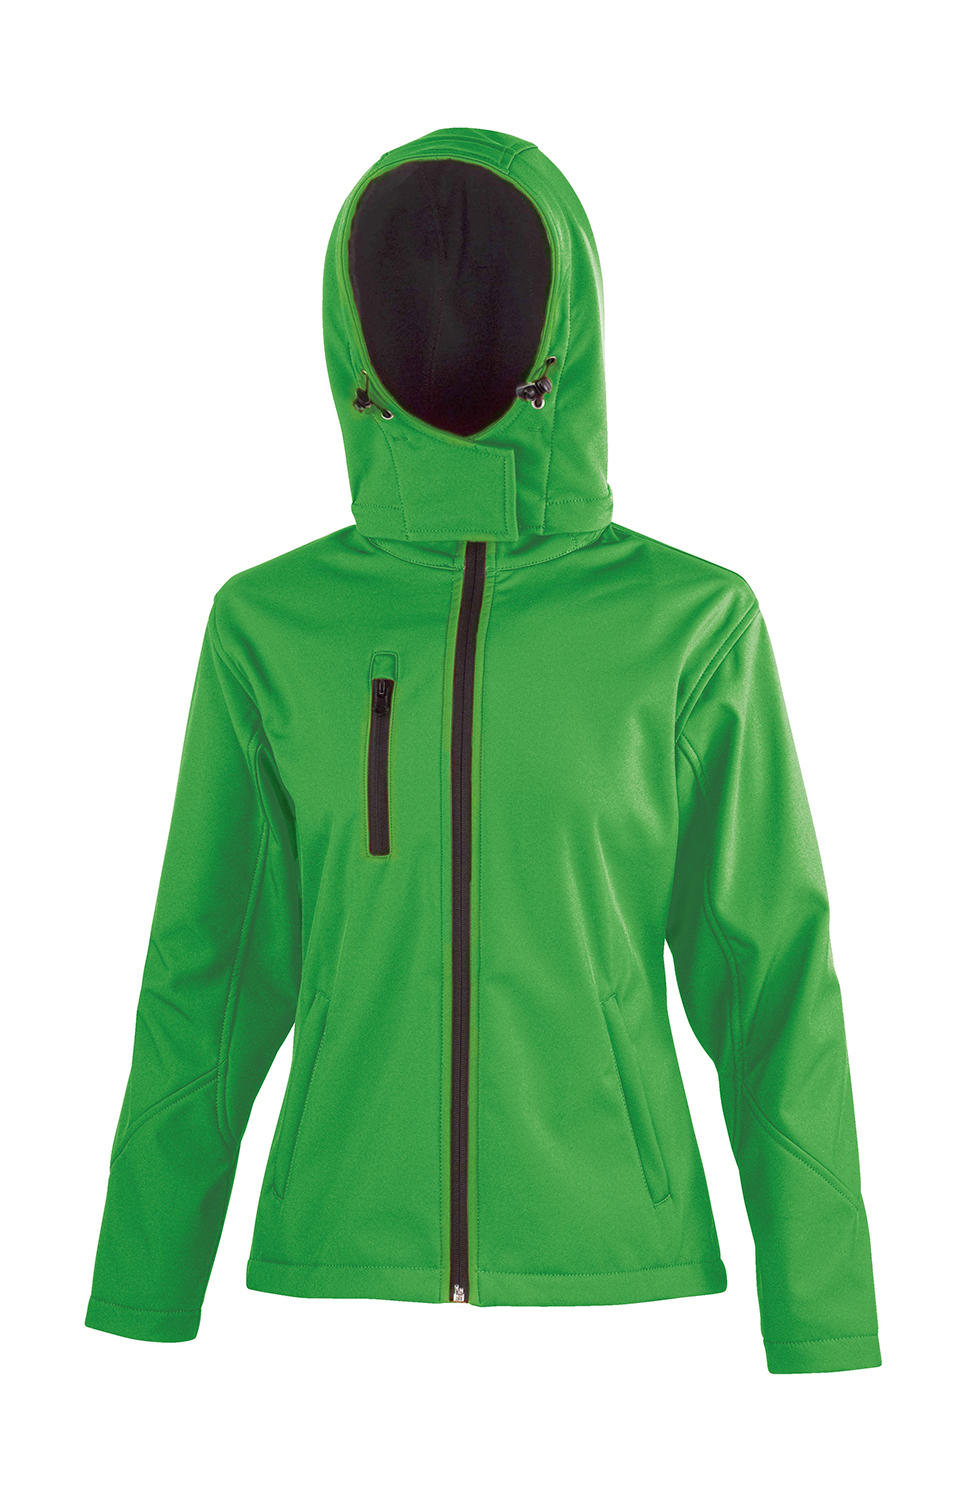  Ladies TX Performance Hooded Softshell Jacket in Farbe Vivid Green/Black